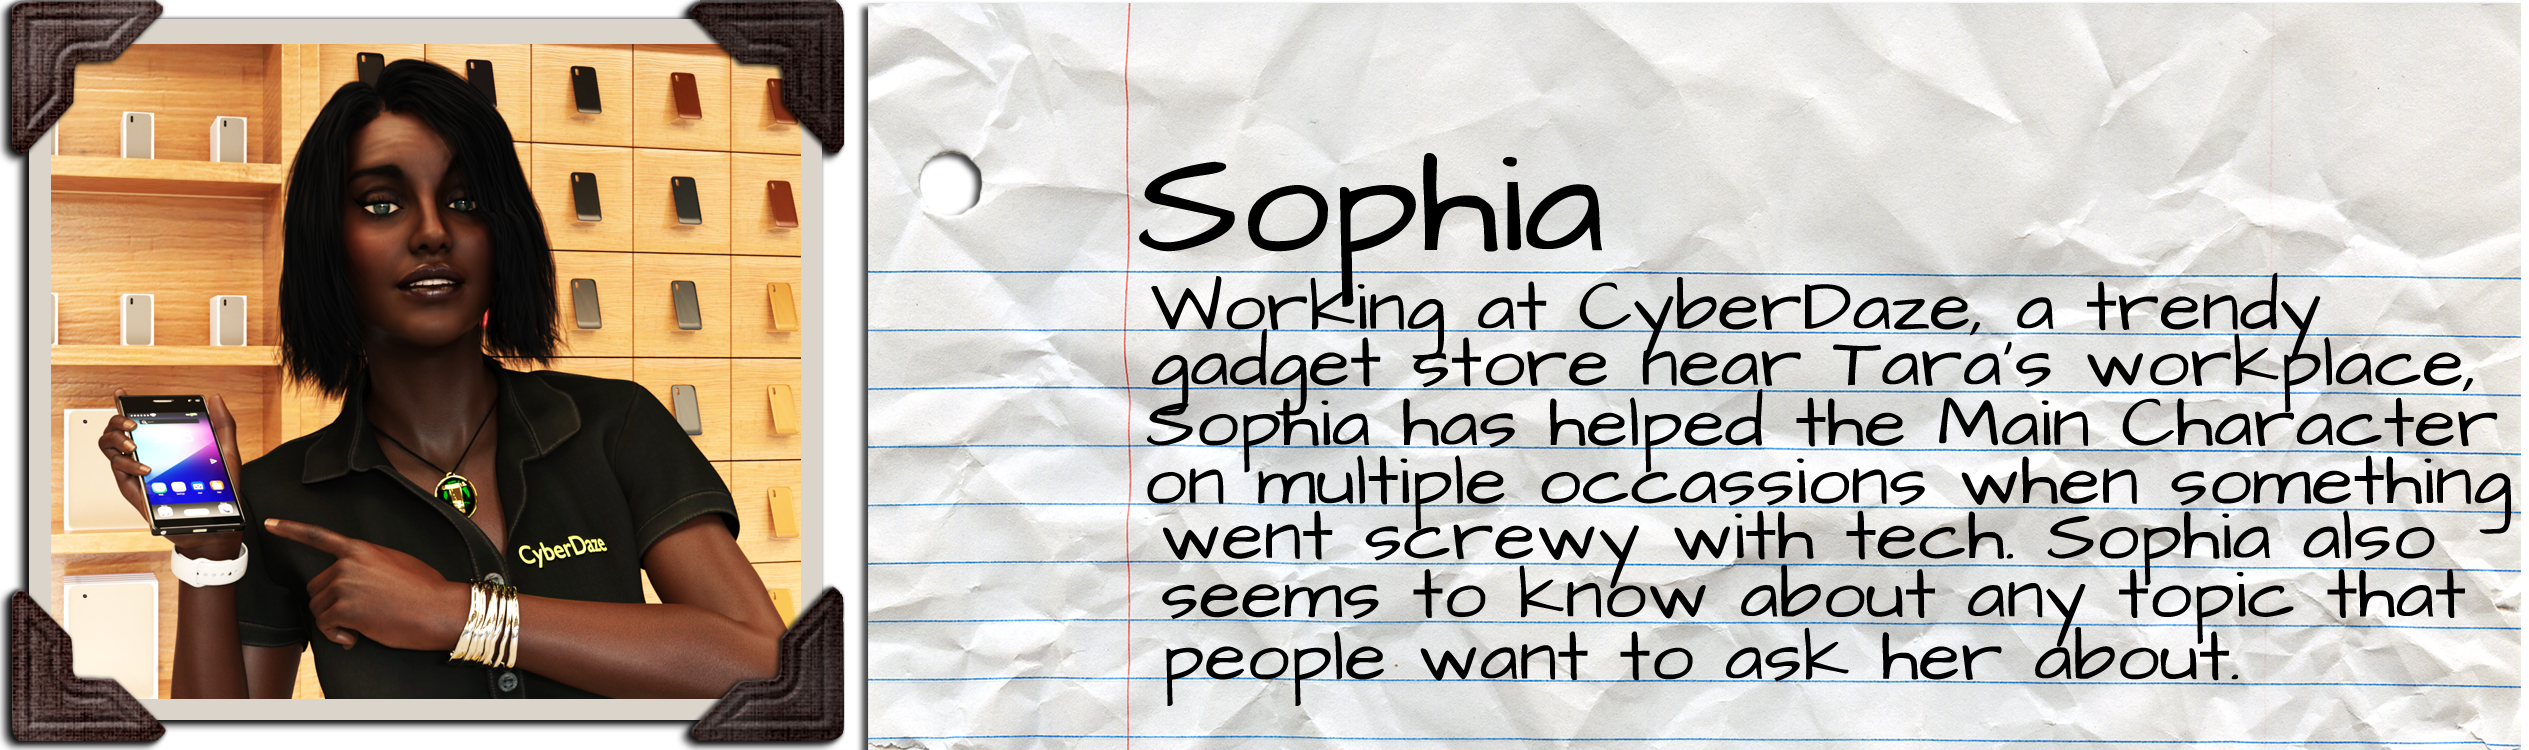 Sophia Blurb.png